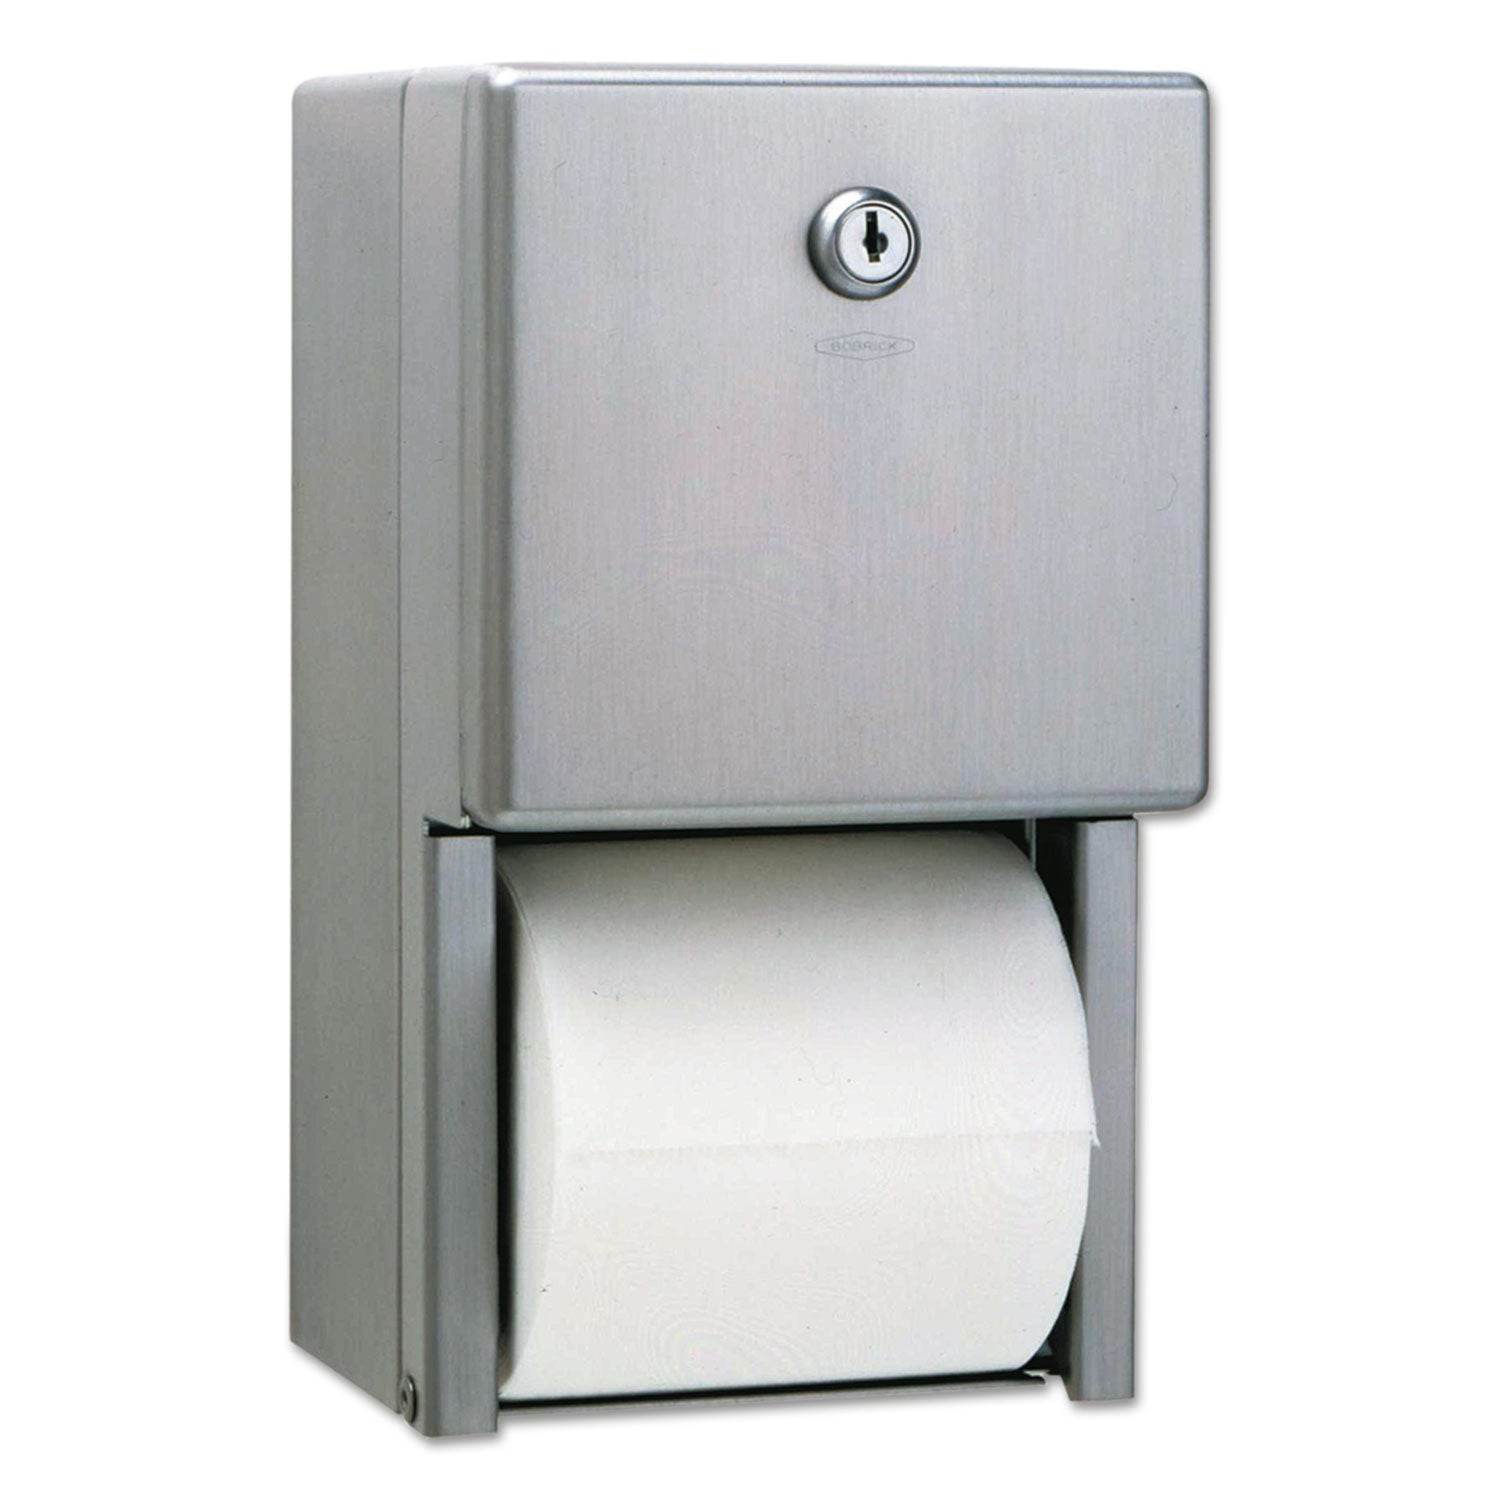 Stainless Steel 2-Roll Tissue Dispenser, 6.06 x 5.94 x 11, Stainless Steel - 